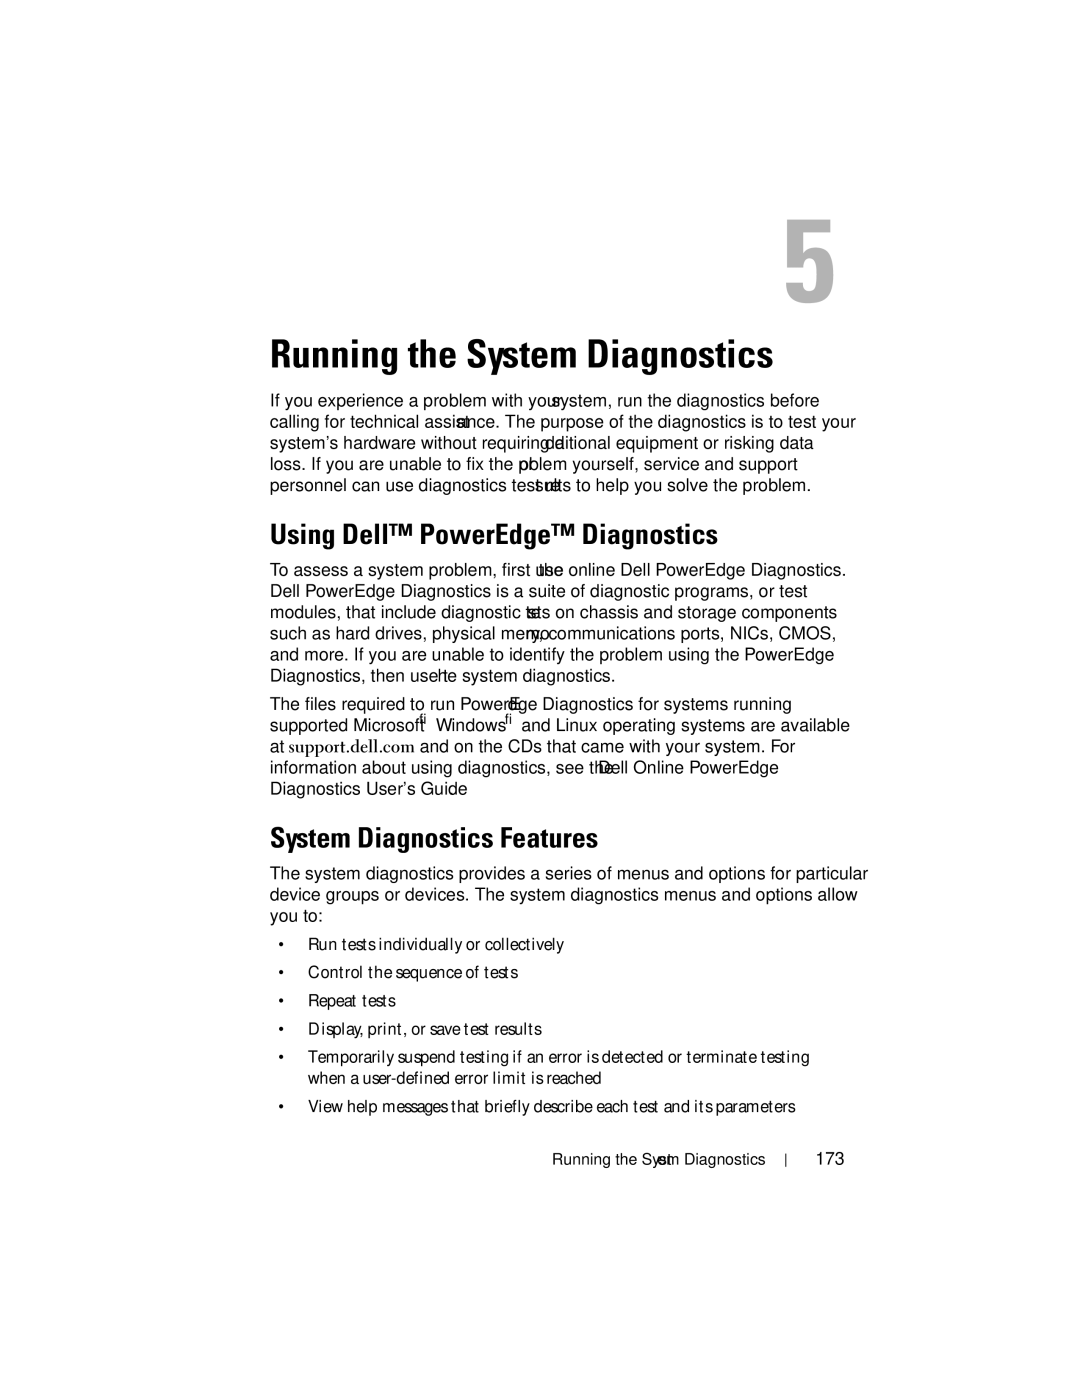 Dell R710 owner manual Using Dell PowerEdge Diagnostics, System Diagnostics Features, 173, Running the System Diagnostics 